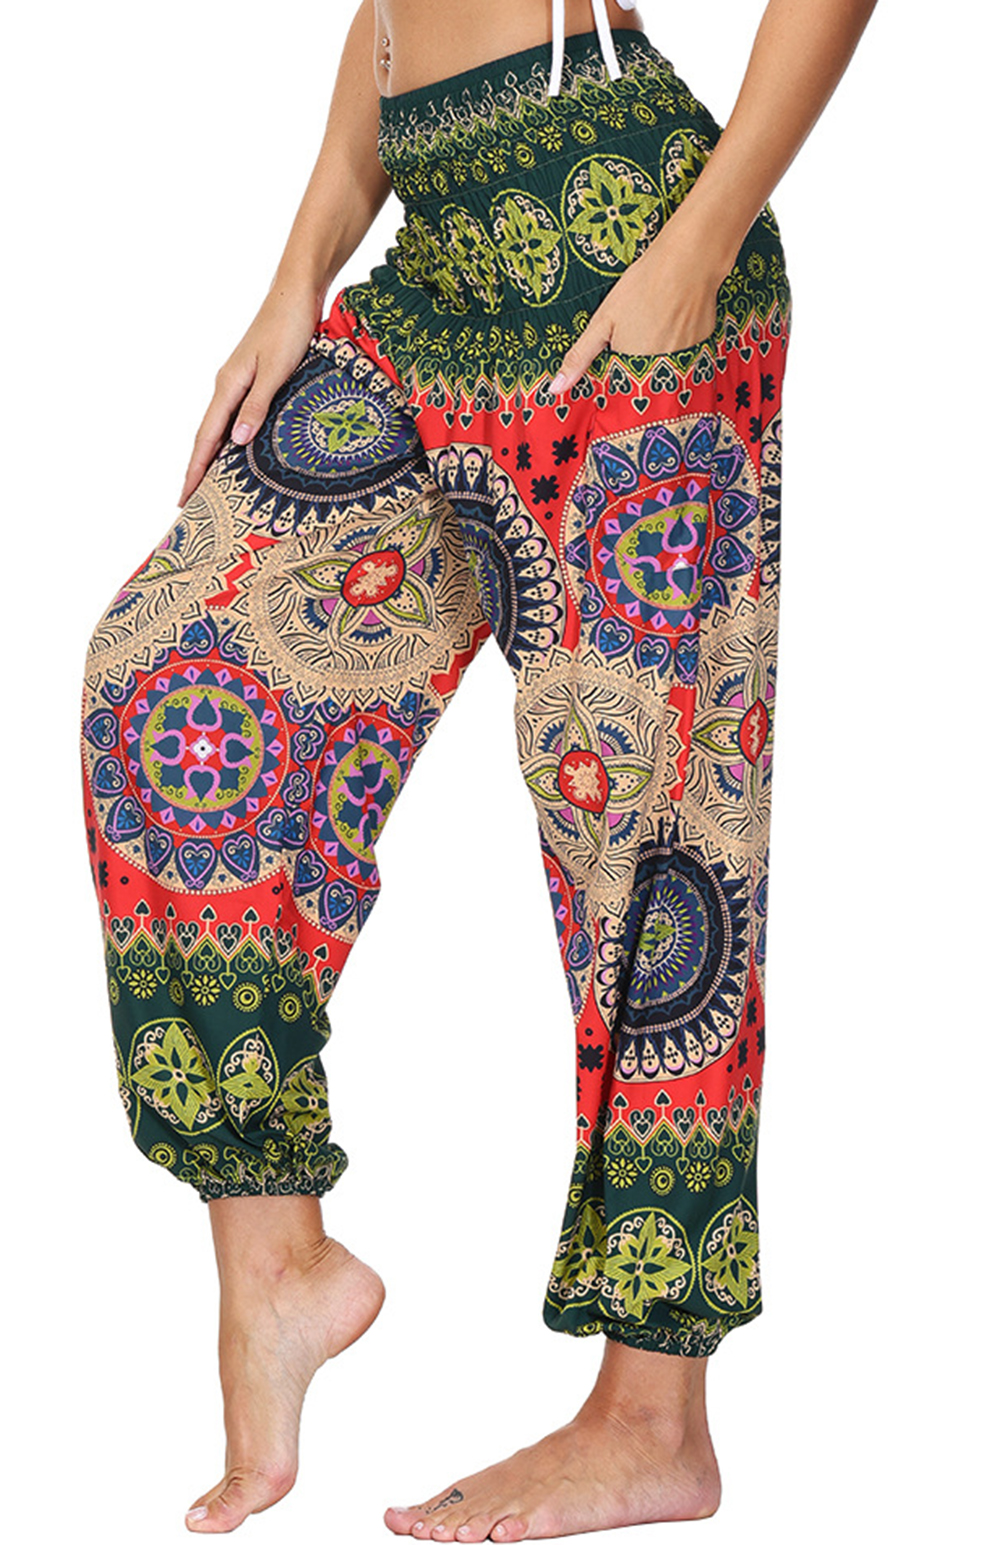 Pantaloni da donna Harem pantaloni da Yoga indiani bohémien a vita alta Smocked pantaloni larghi Boho Hippie con tasche